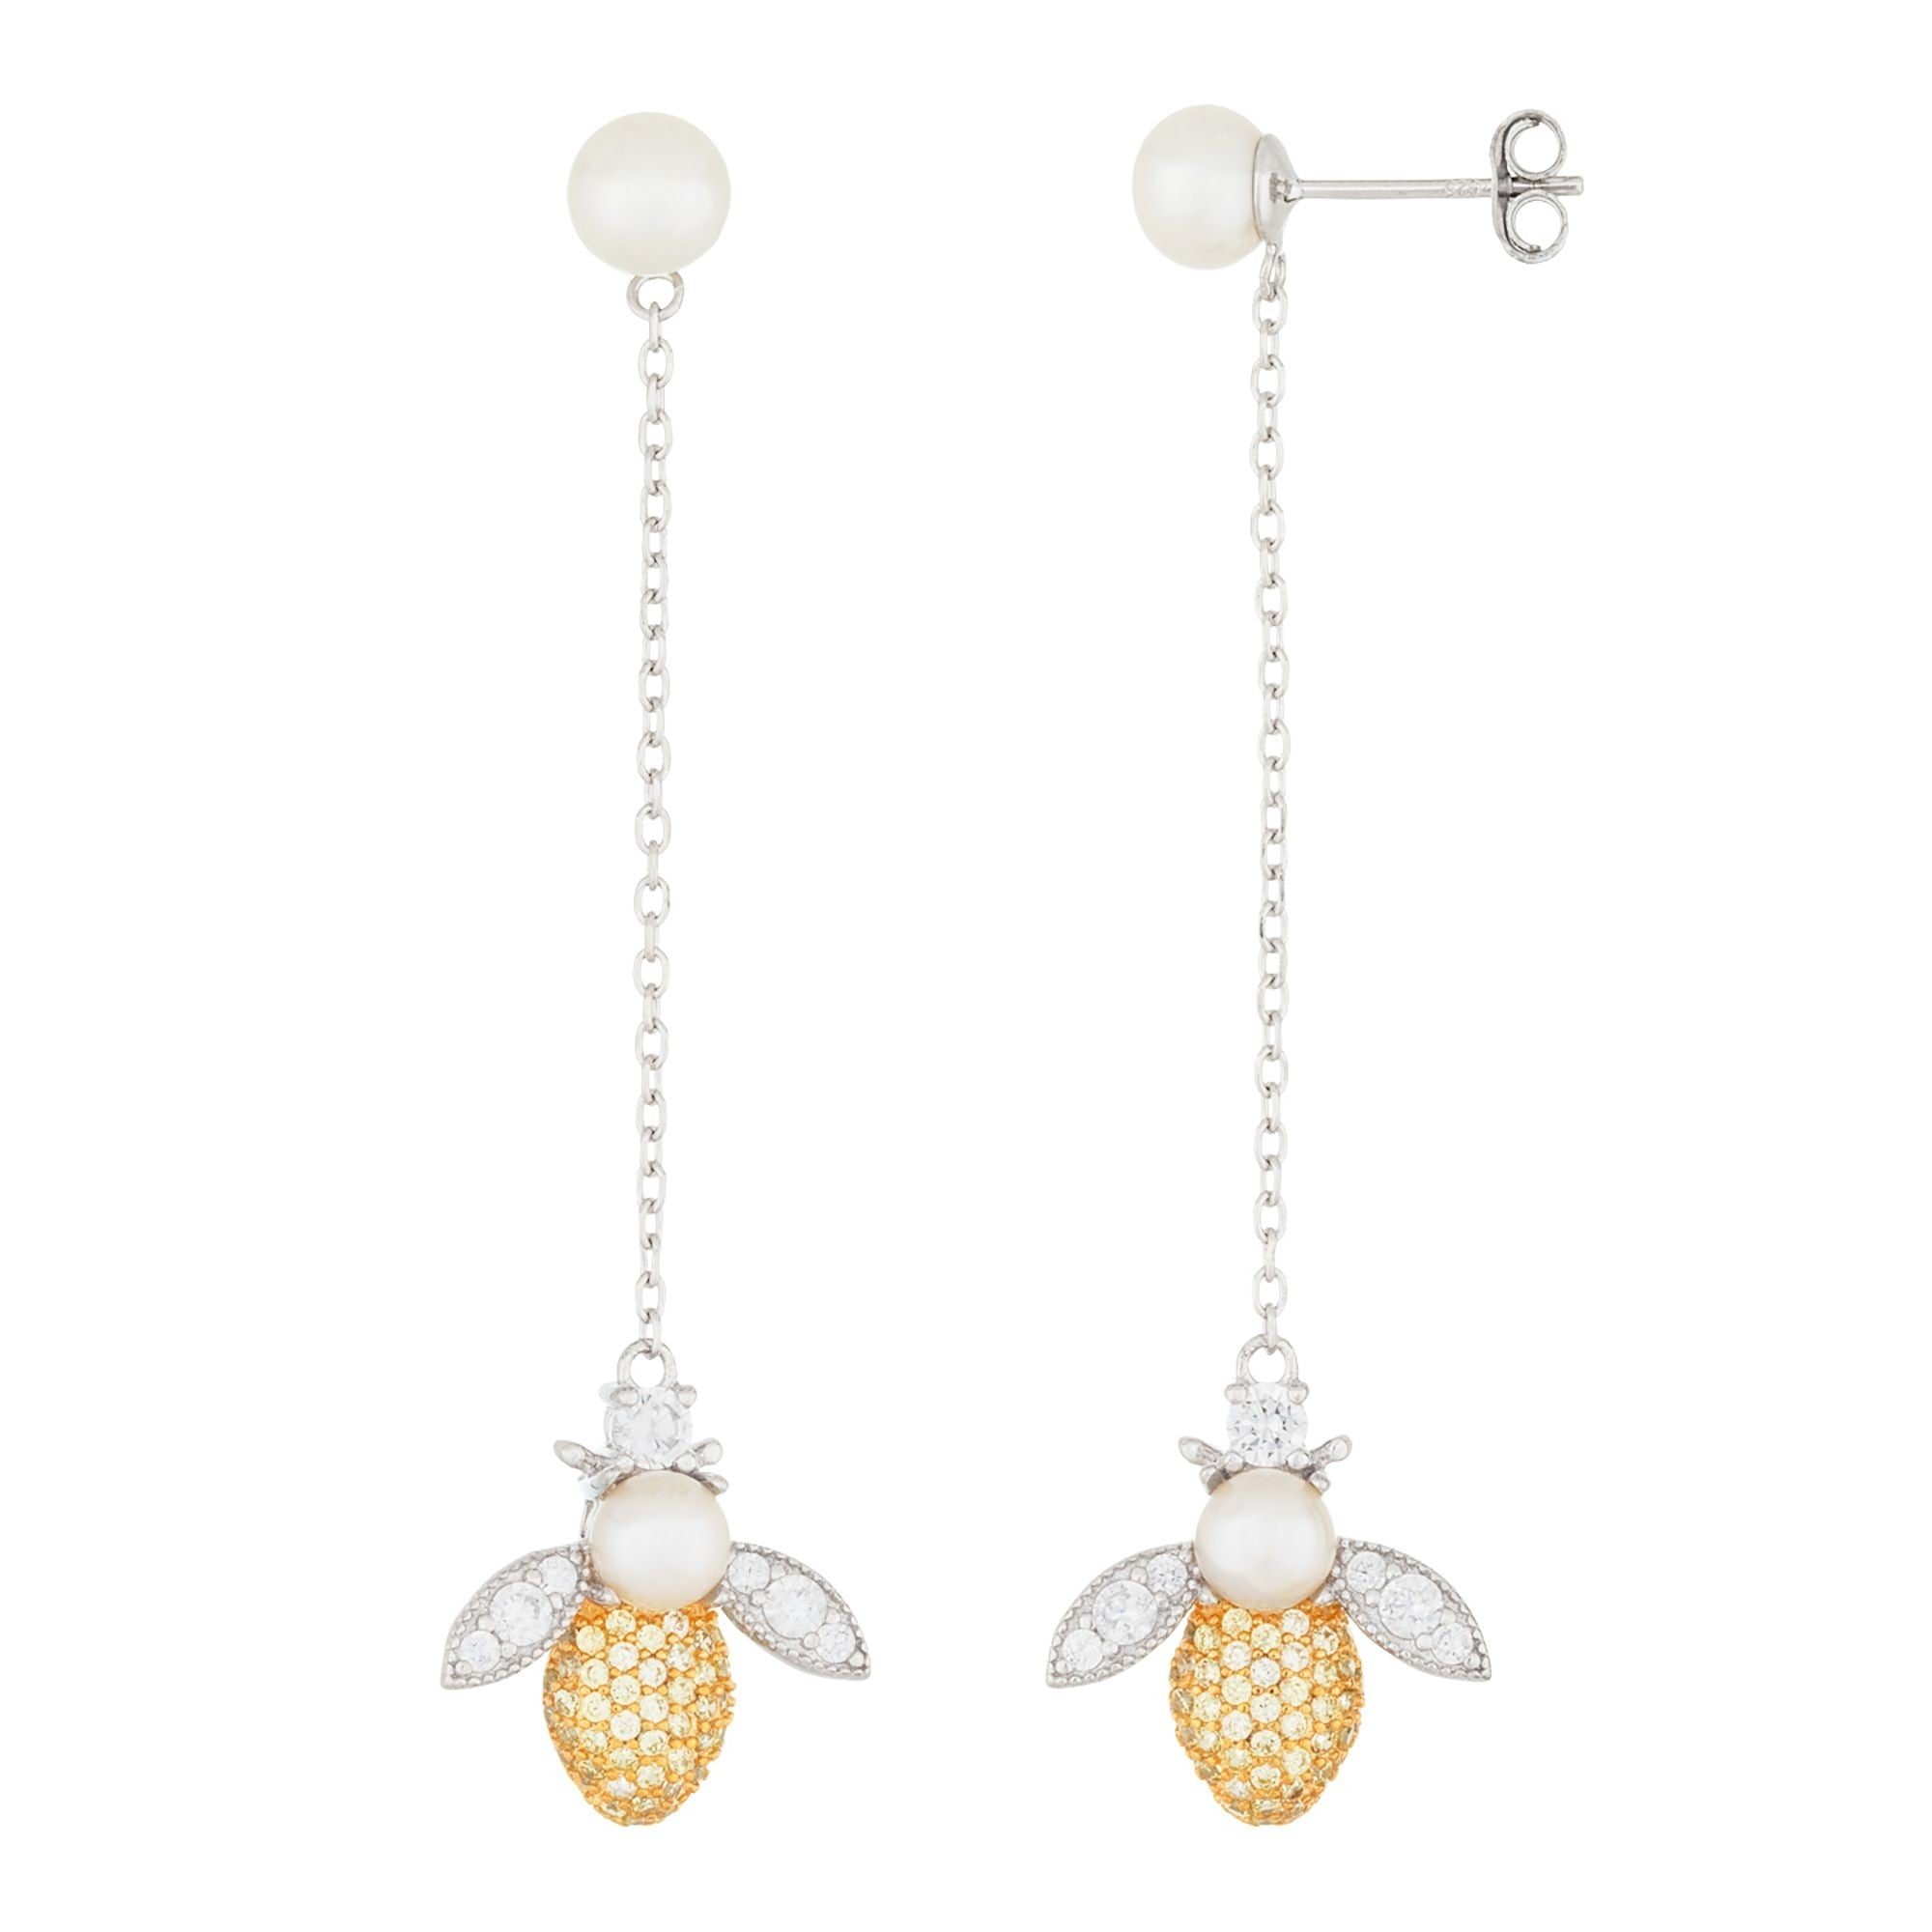 title:Splendid Pearls Sterling Silver Pearl Earrings ESR-490;color:White